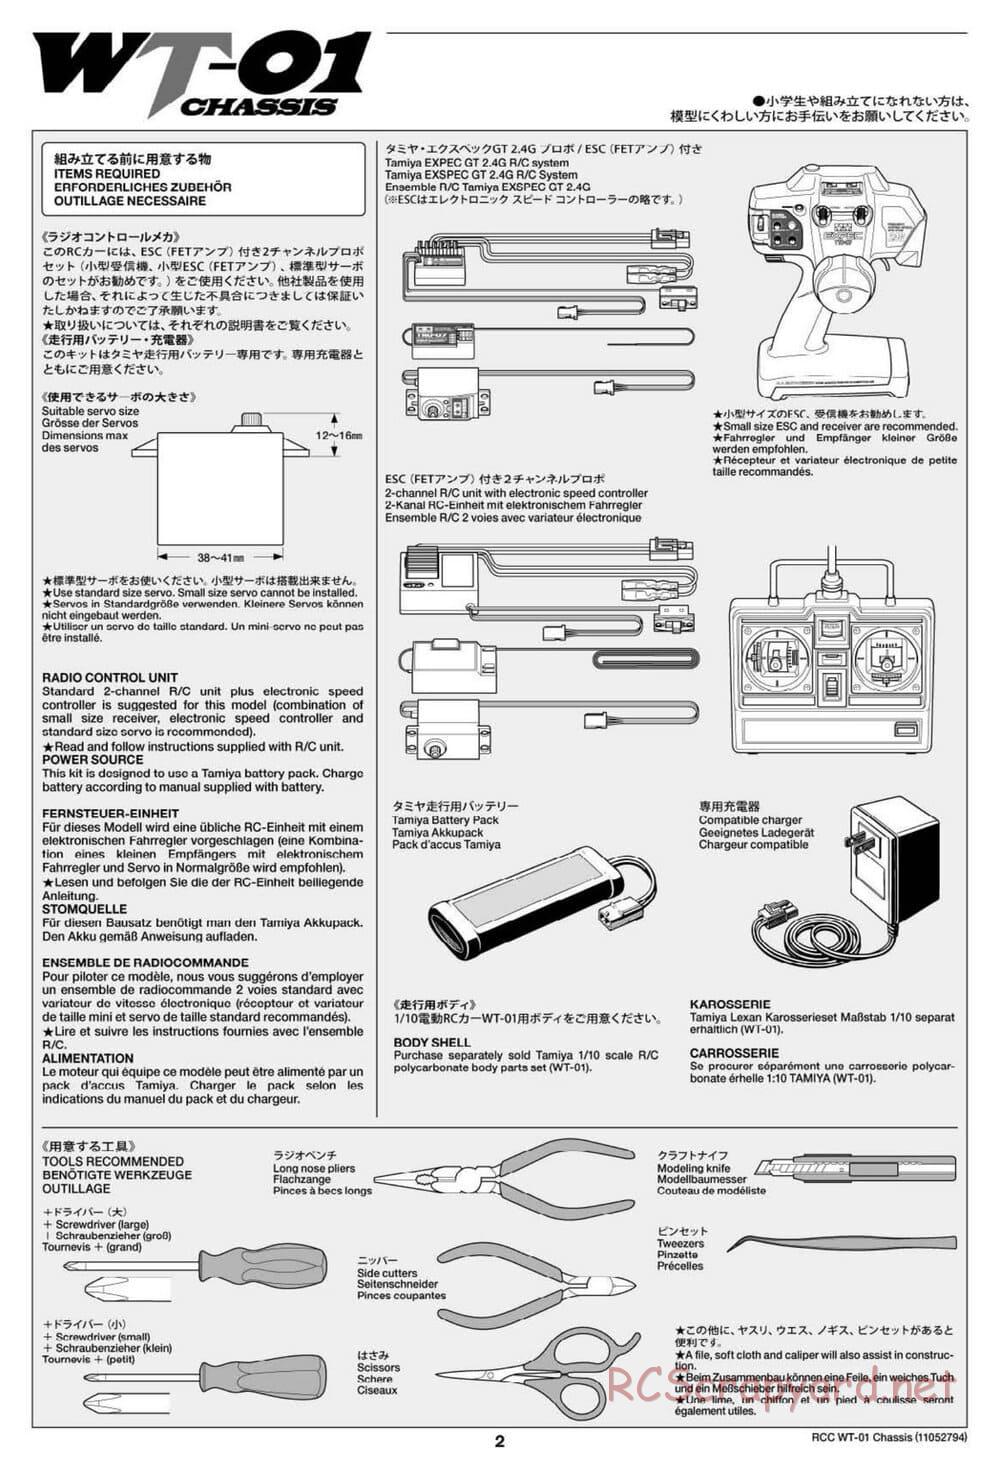 Tamiya - Mud Blaster II - WT-01 Chassis - Manual - Page 2